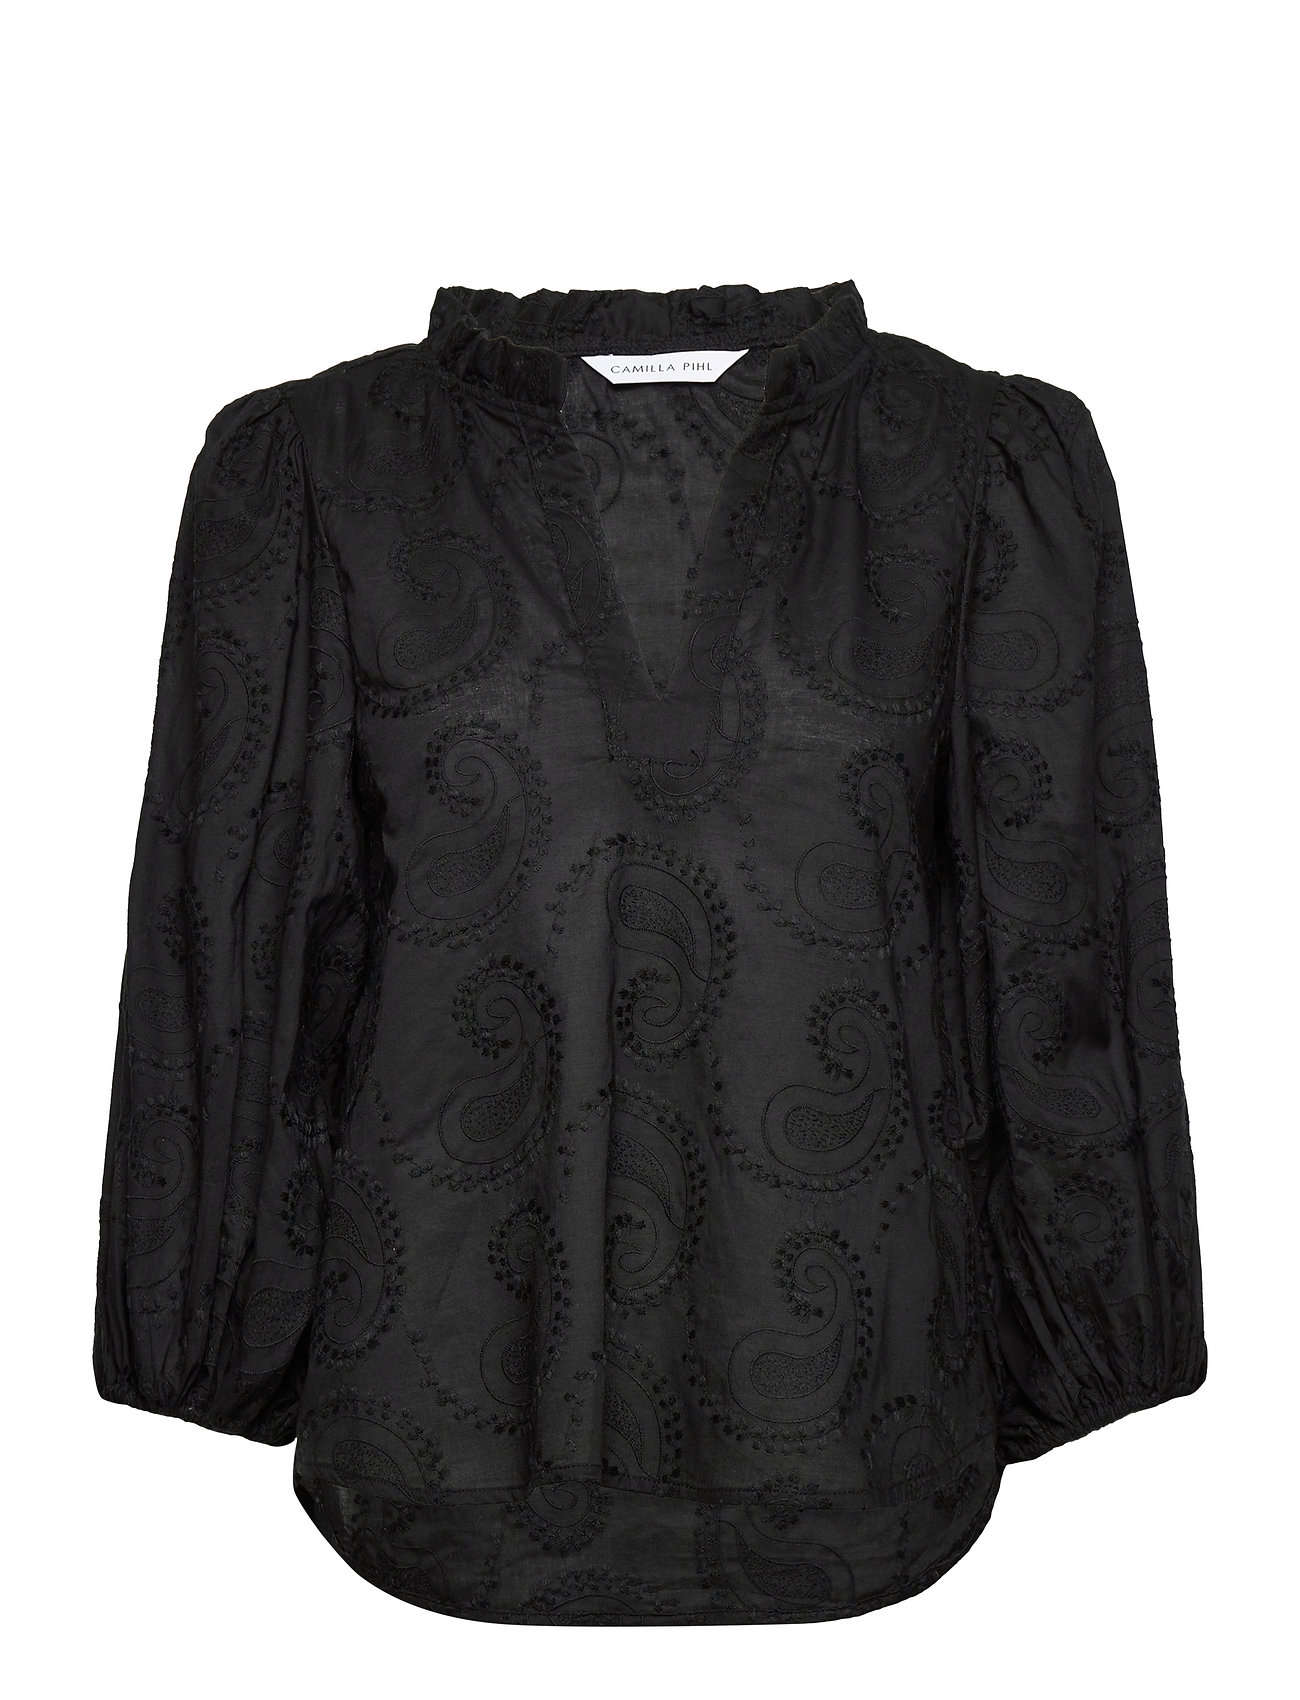 Camilla Pihl Trinidad Lace Blouse - Long sleeved blouses - Boozt.com